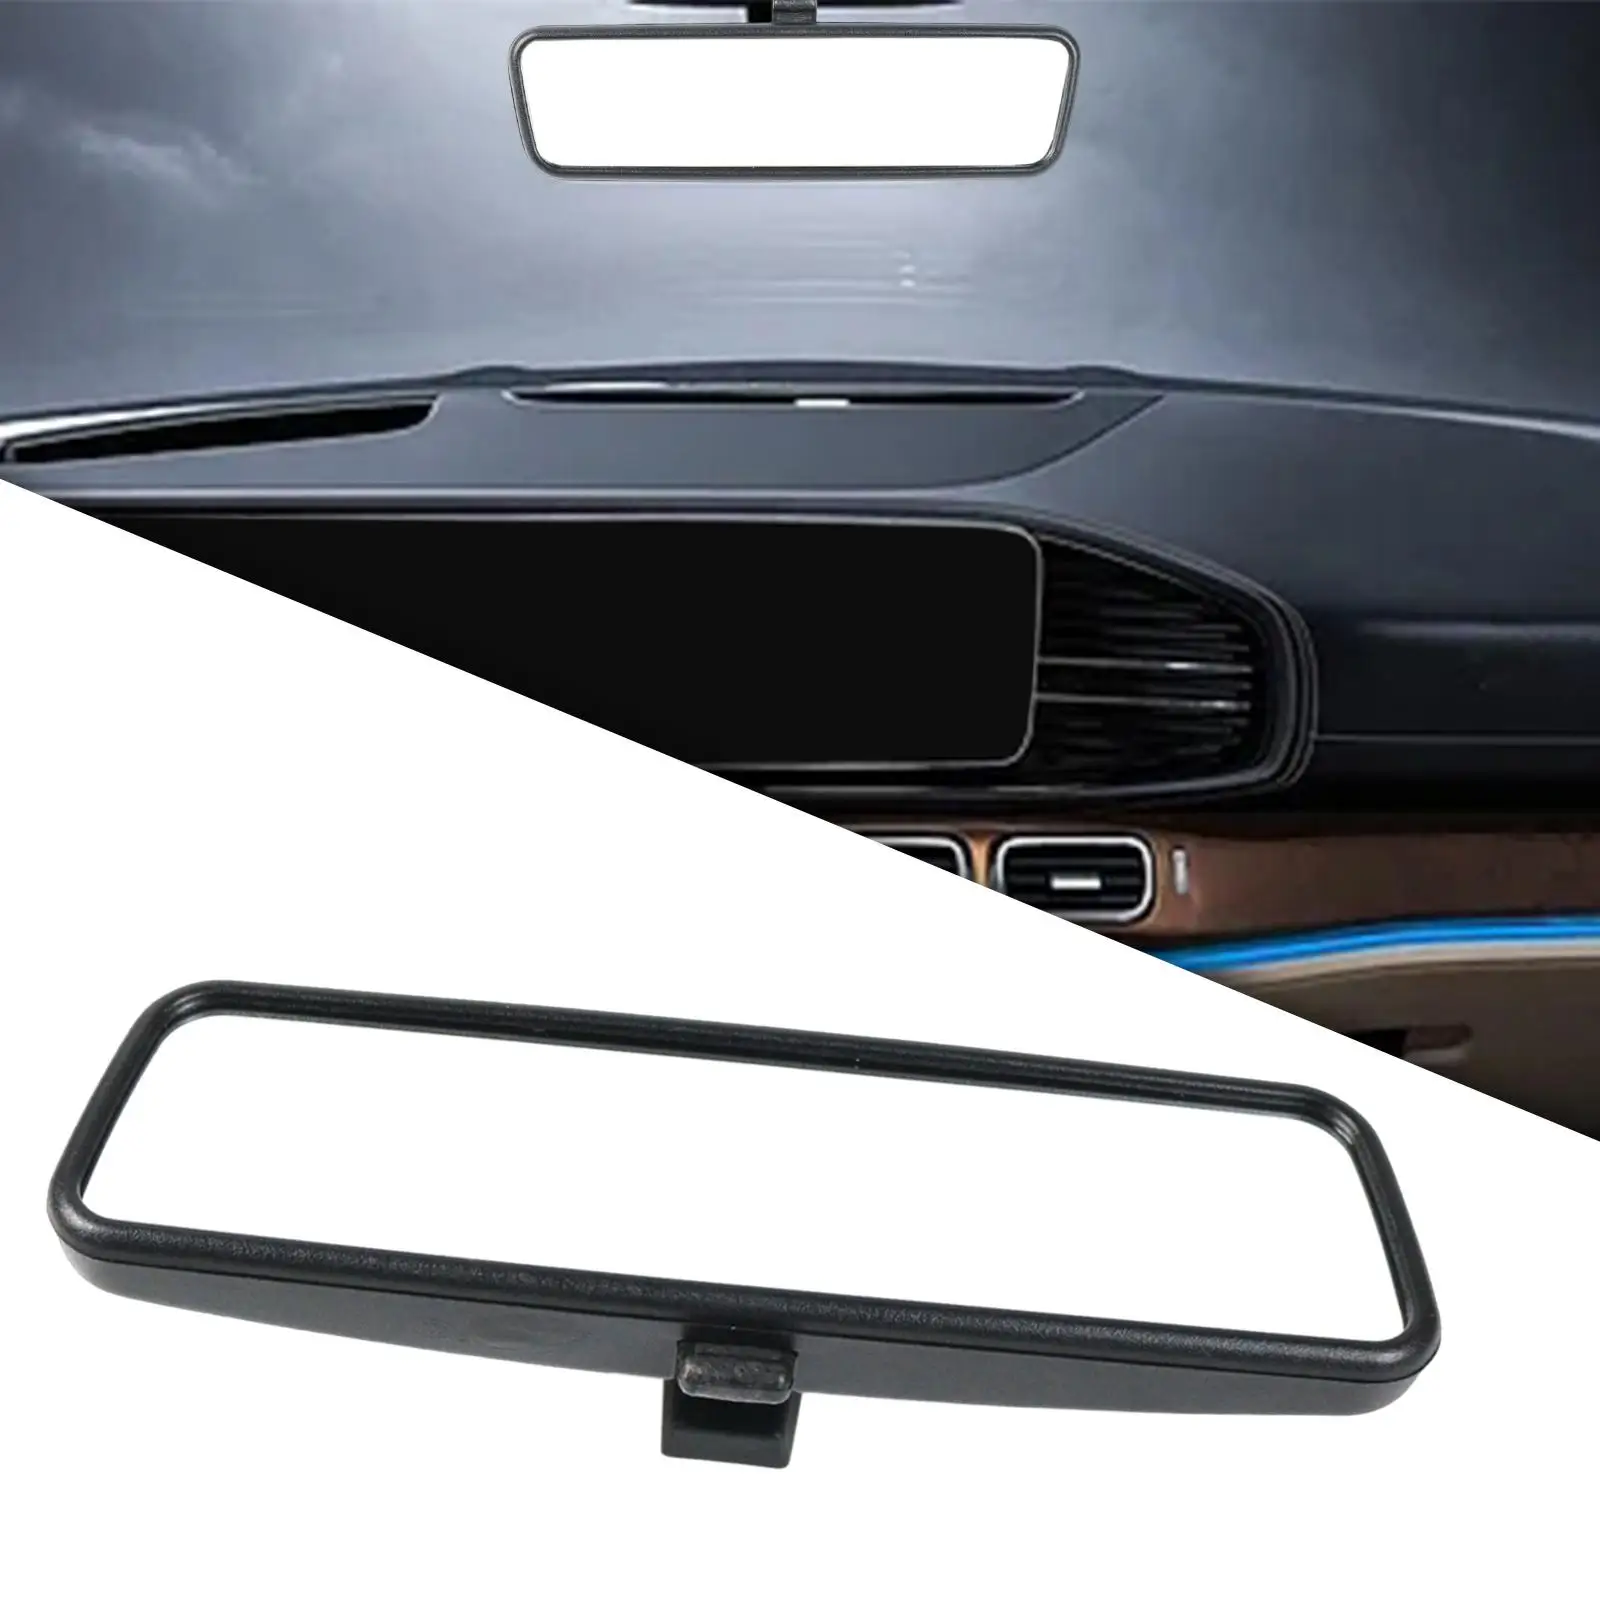 Interior Rear View Mirror 814842 Rearview Mirror for Citroen C1 Replaces Automobile Premium Durable